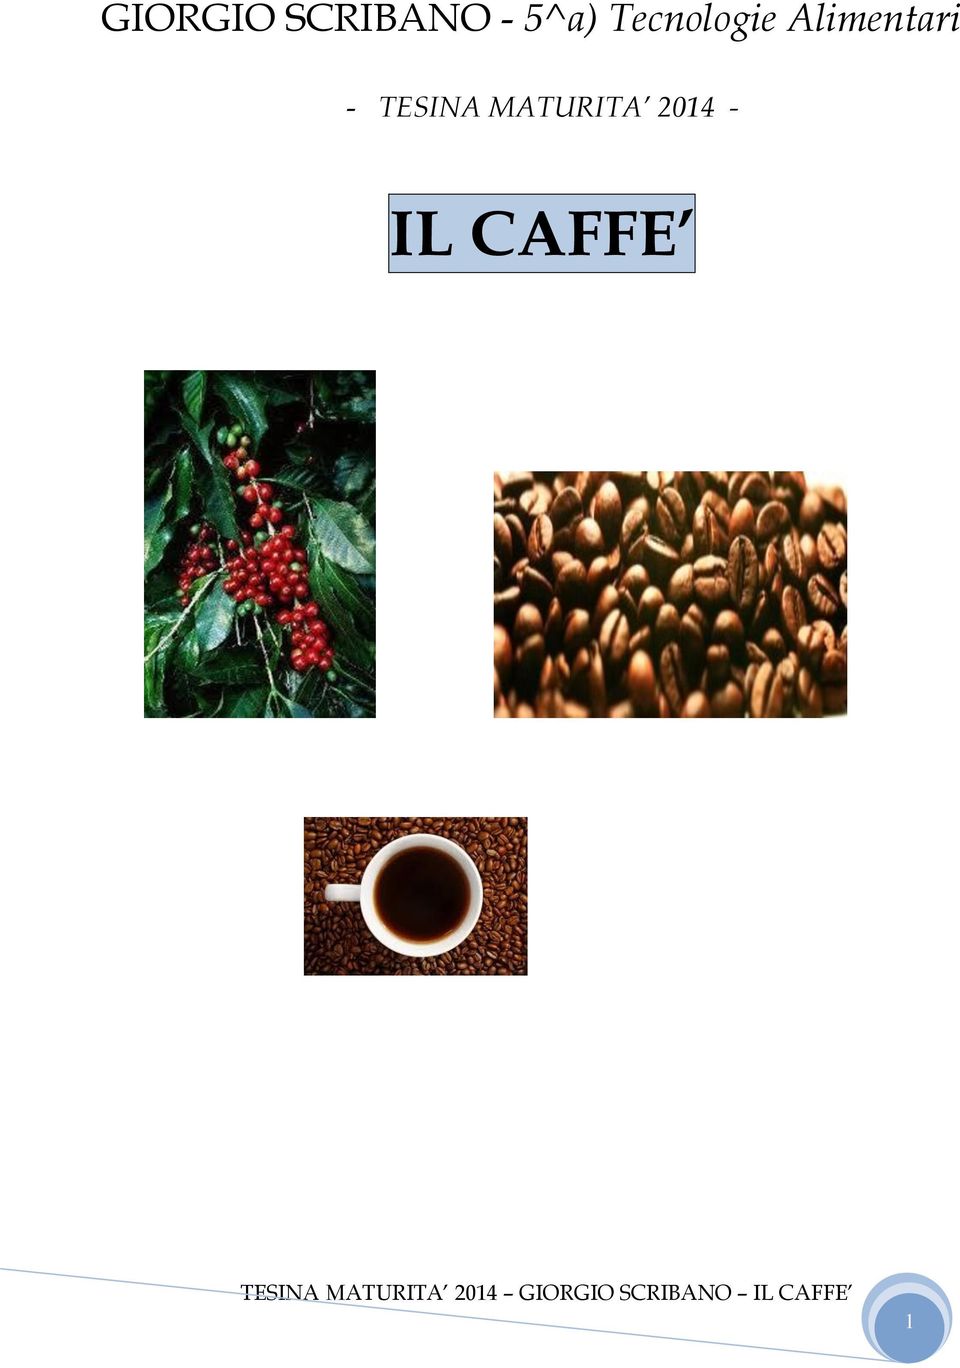 MATURITA 2014 - IL CAFFE TESINA